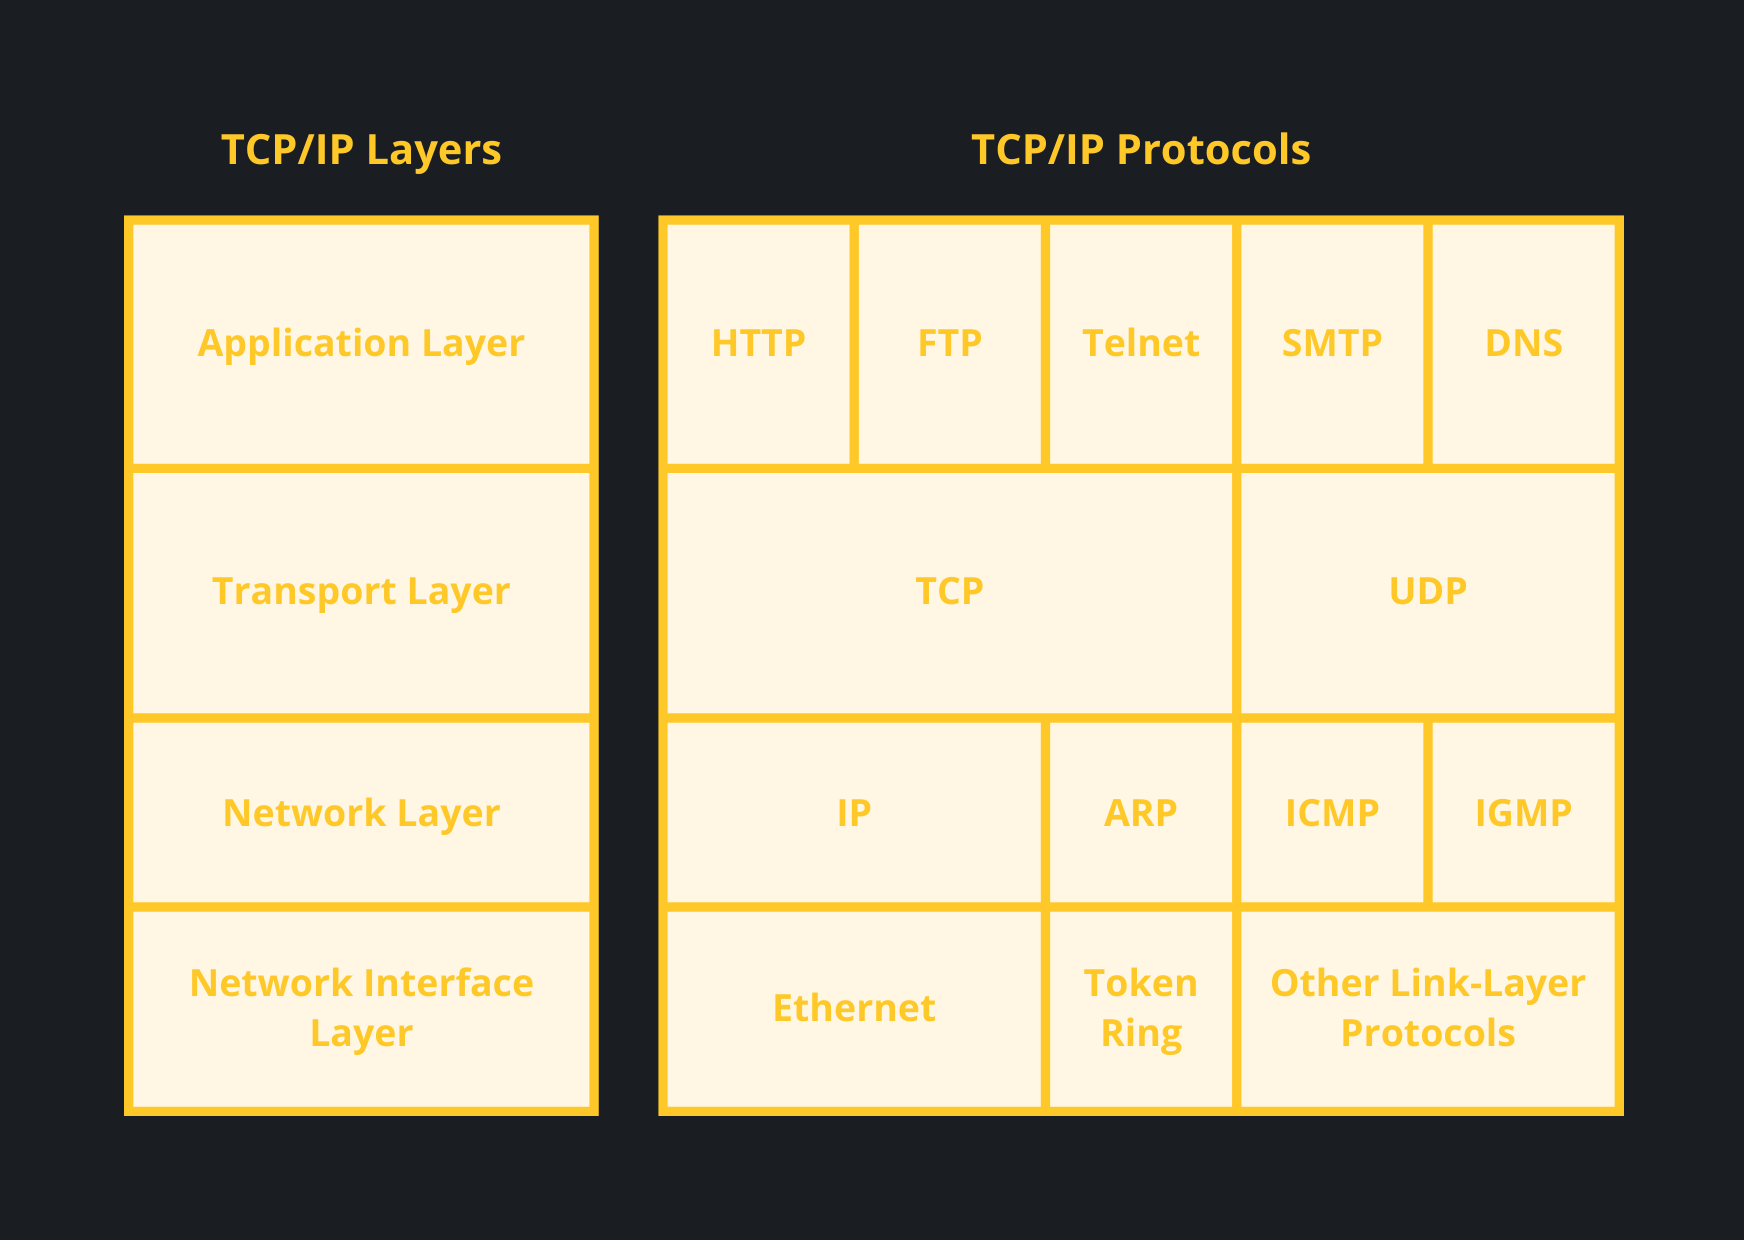 TCPIP layers and protocols.